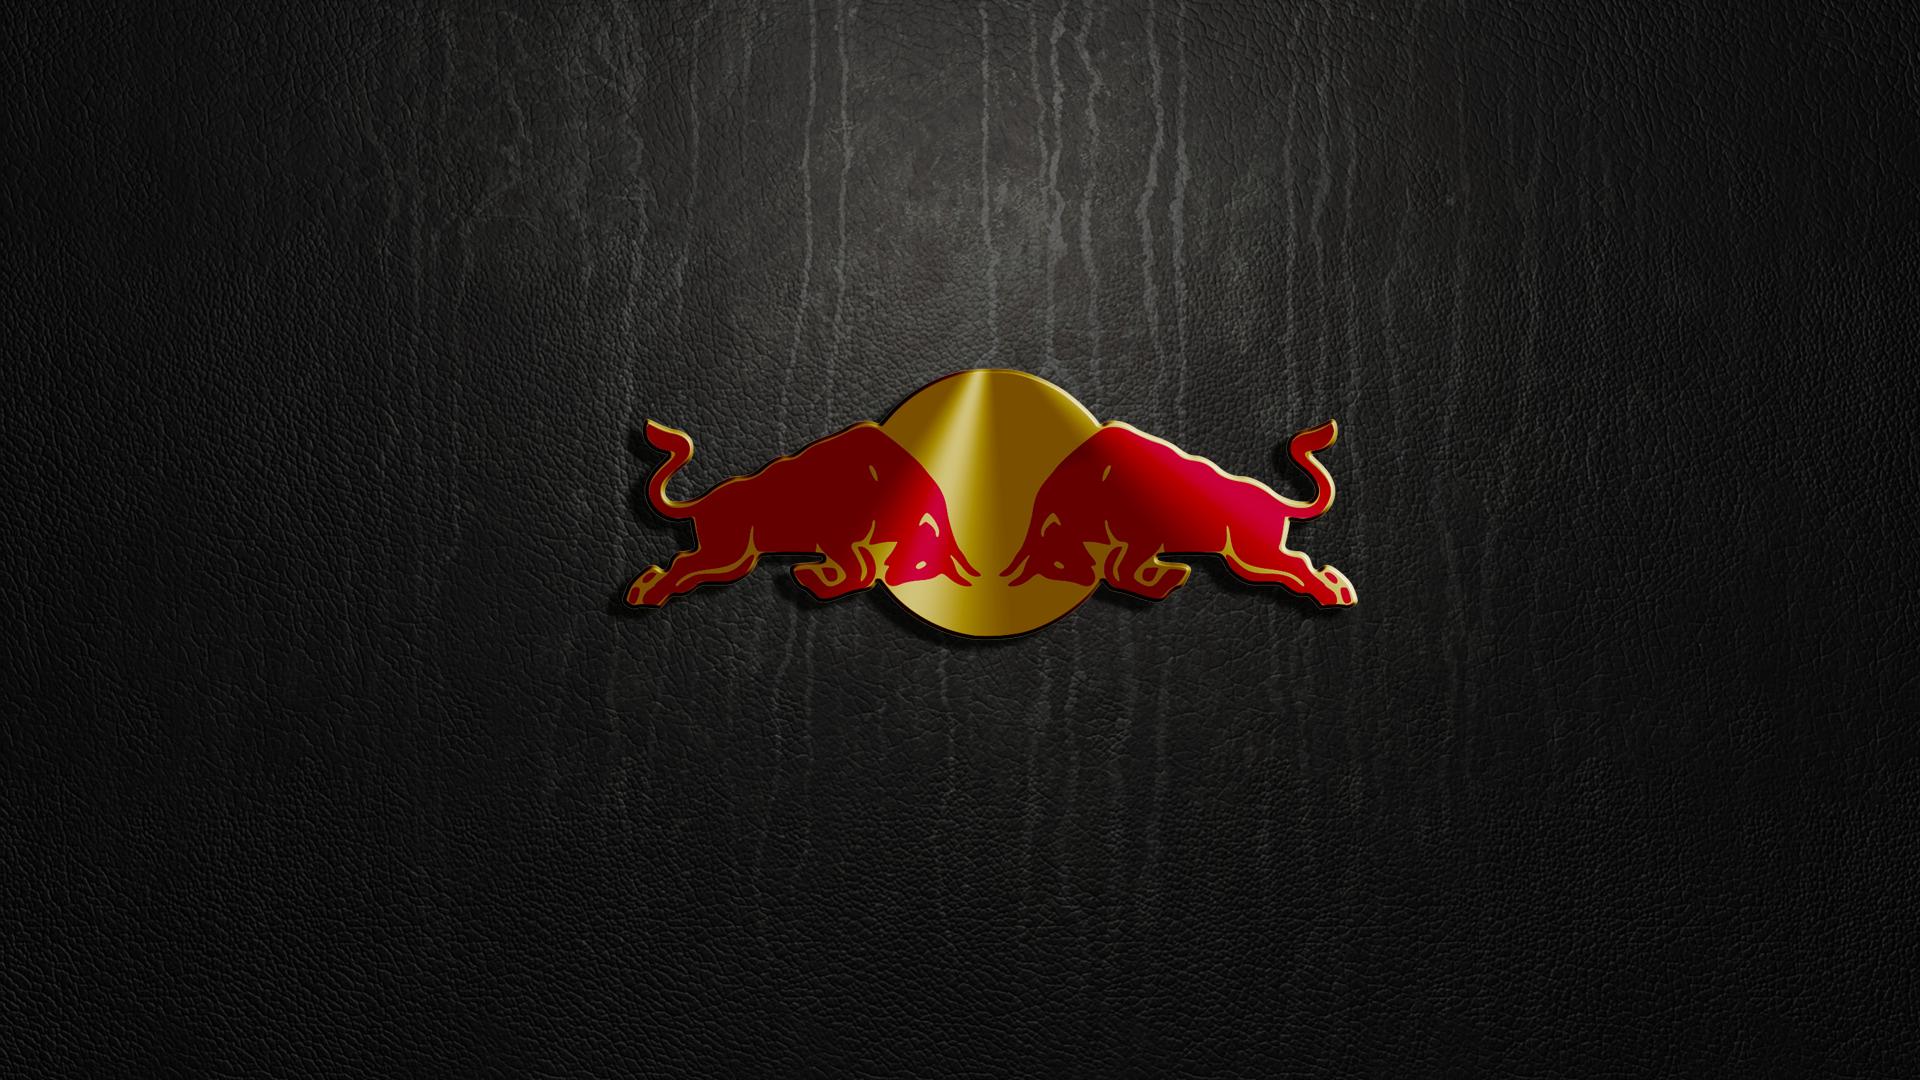 Red Bull i Good Looking Studio - Branding wymalowany na trawie Good Looking Studio 8Vcu17L